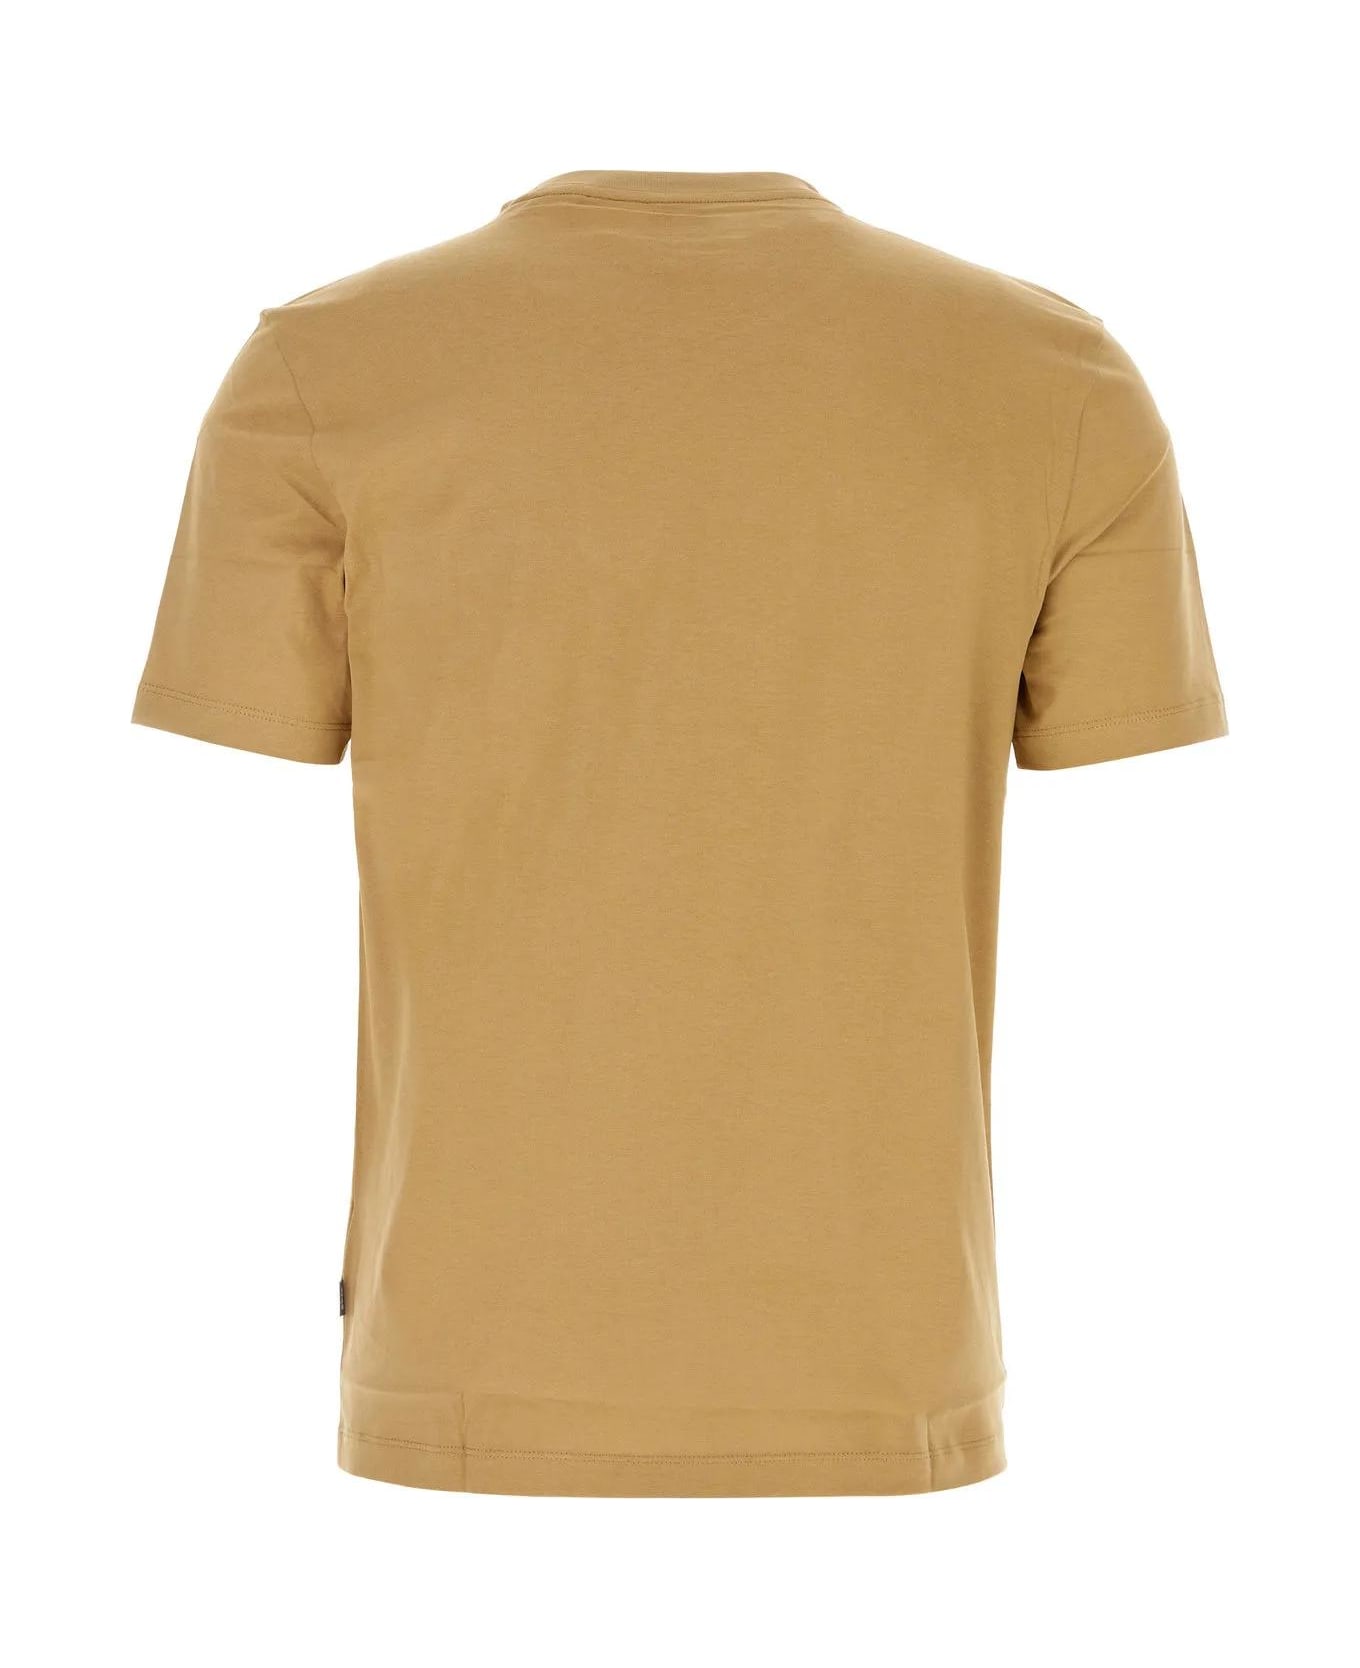 Hugo Boss Camel Cotton T-shirt - Medium Beige シャツ